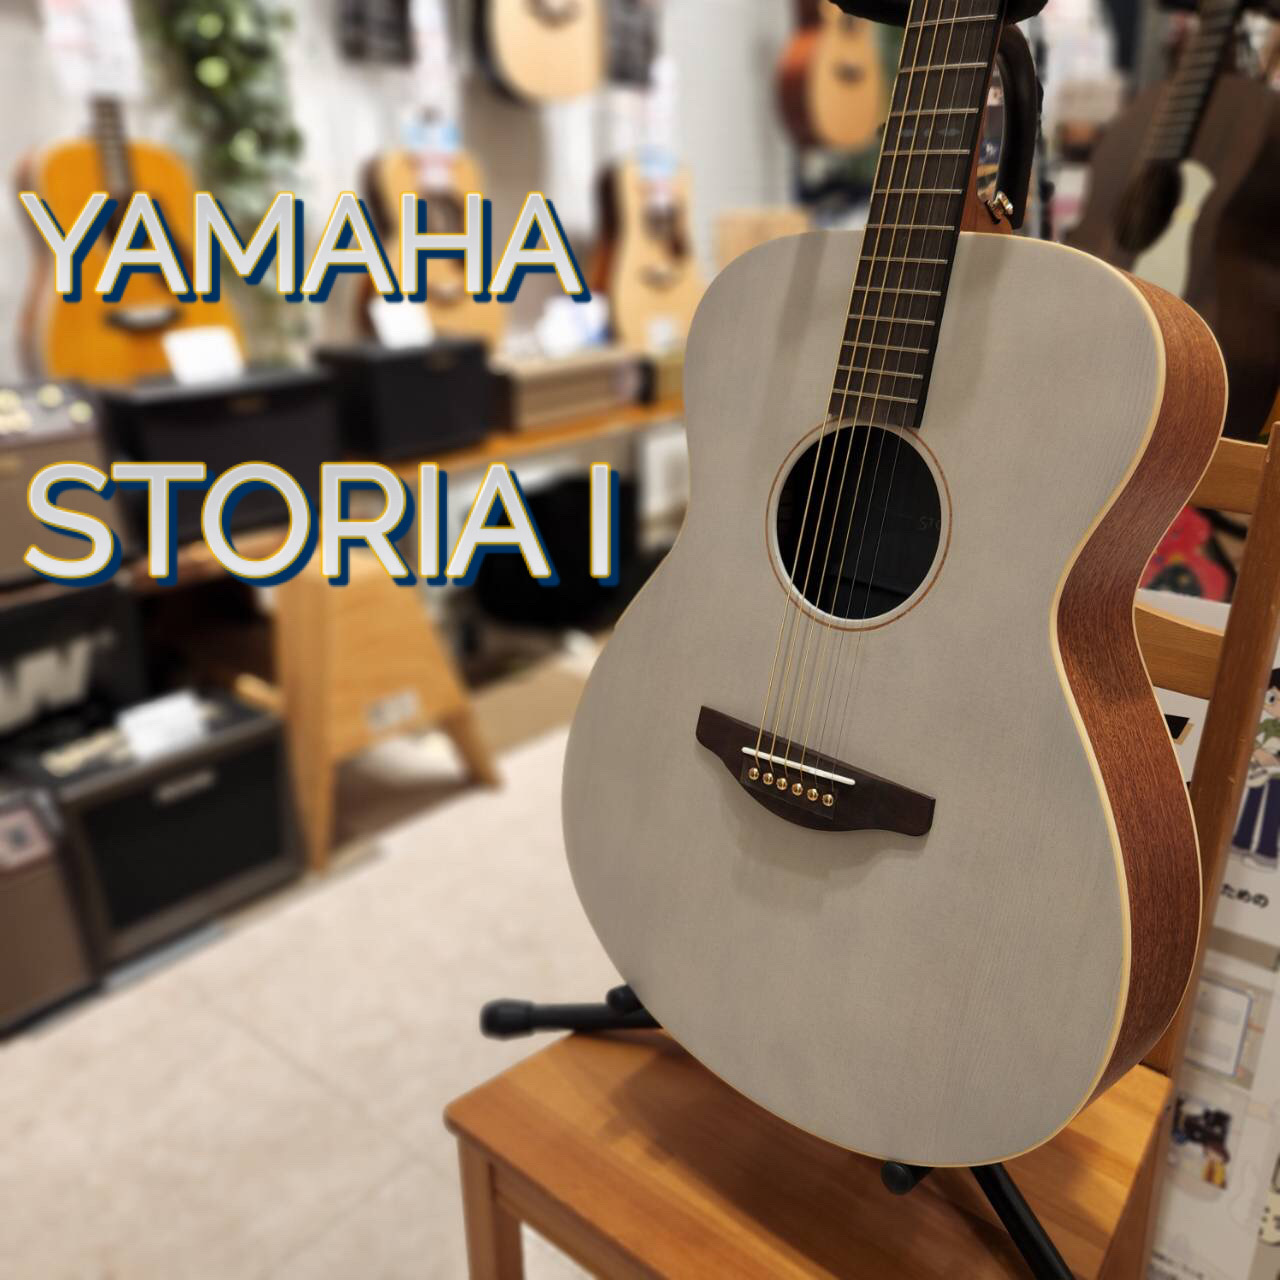 YAMAHA アコースティックギター STORIA Ⅰ ストーリア1